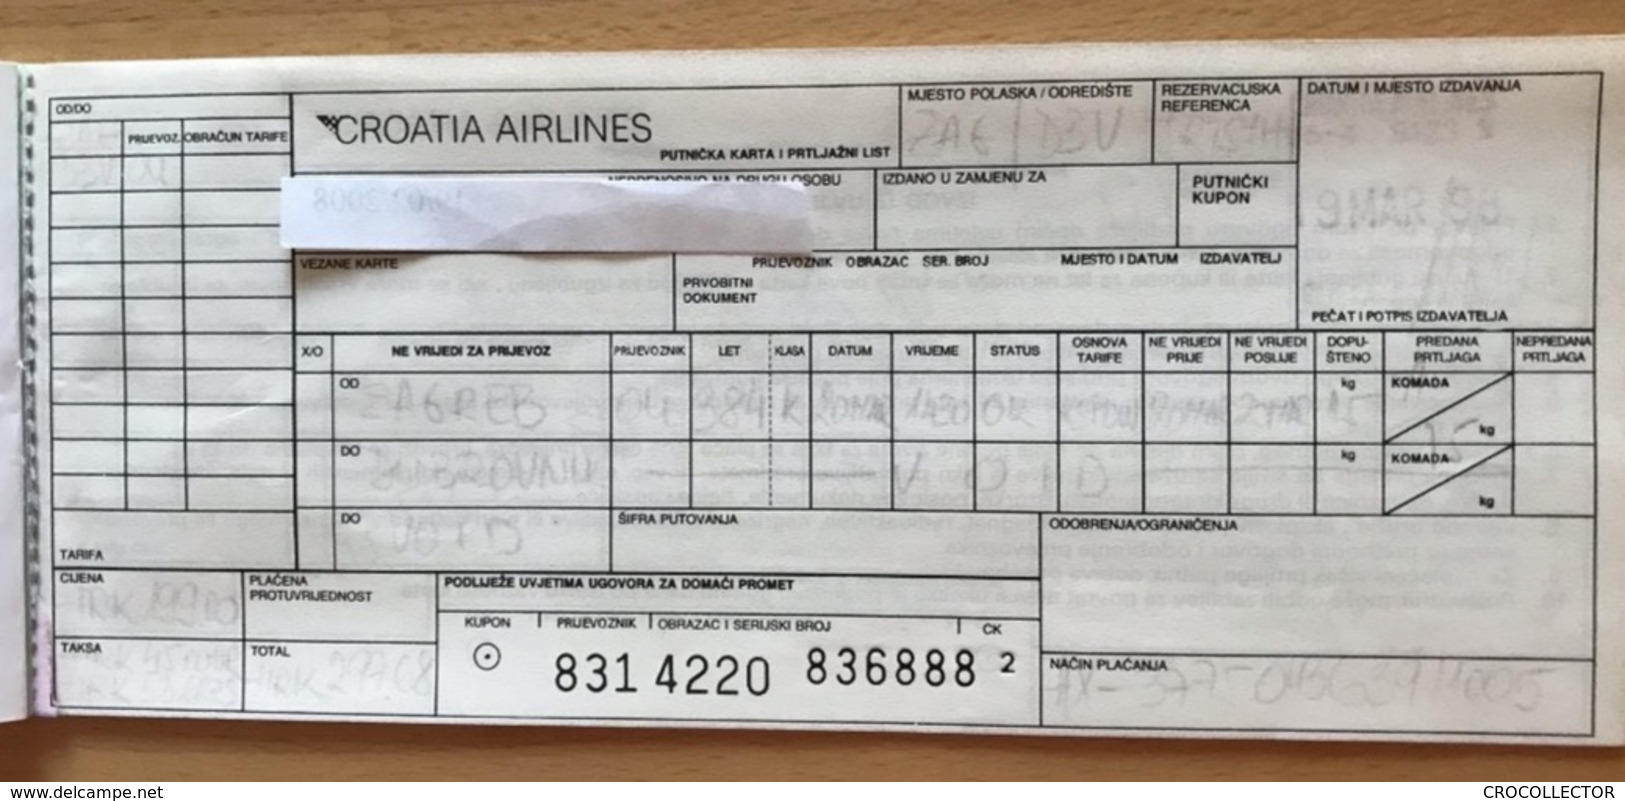 CROATIA AIRLINES TICKET 20MAR98 ZAGREB DUBROVNIK - Biglietti